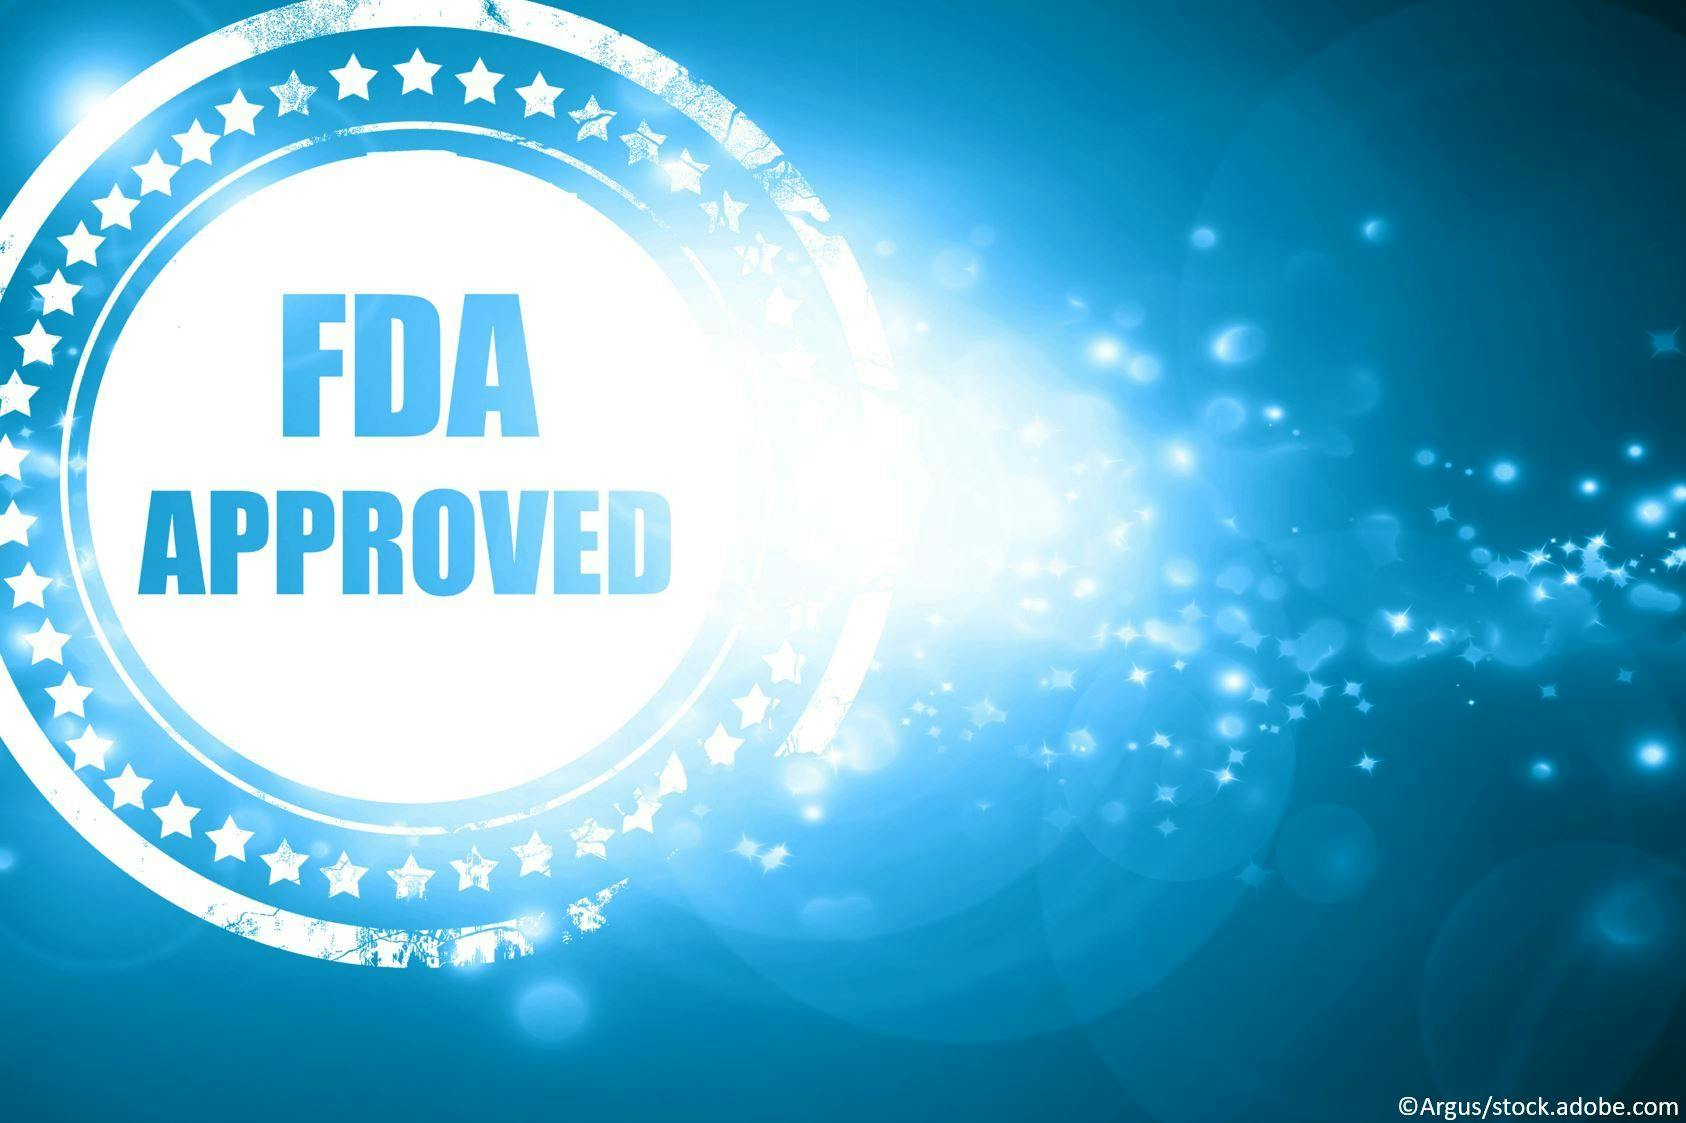 FDA Approves Naloxone Hydrochloride Nasal Spray for OTC, Nonprescription Use / image credit ©Argus/AdobeStock